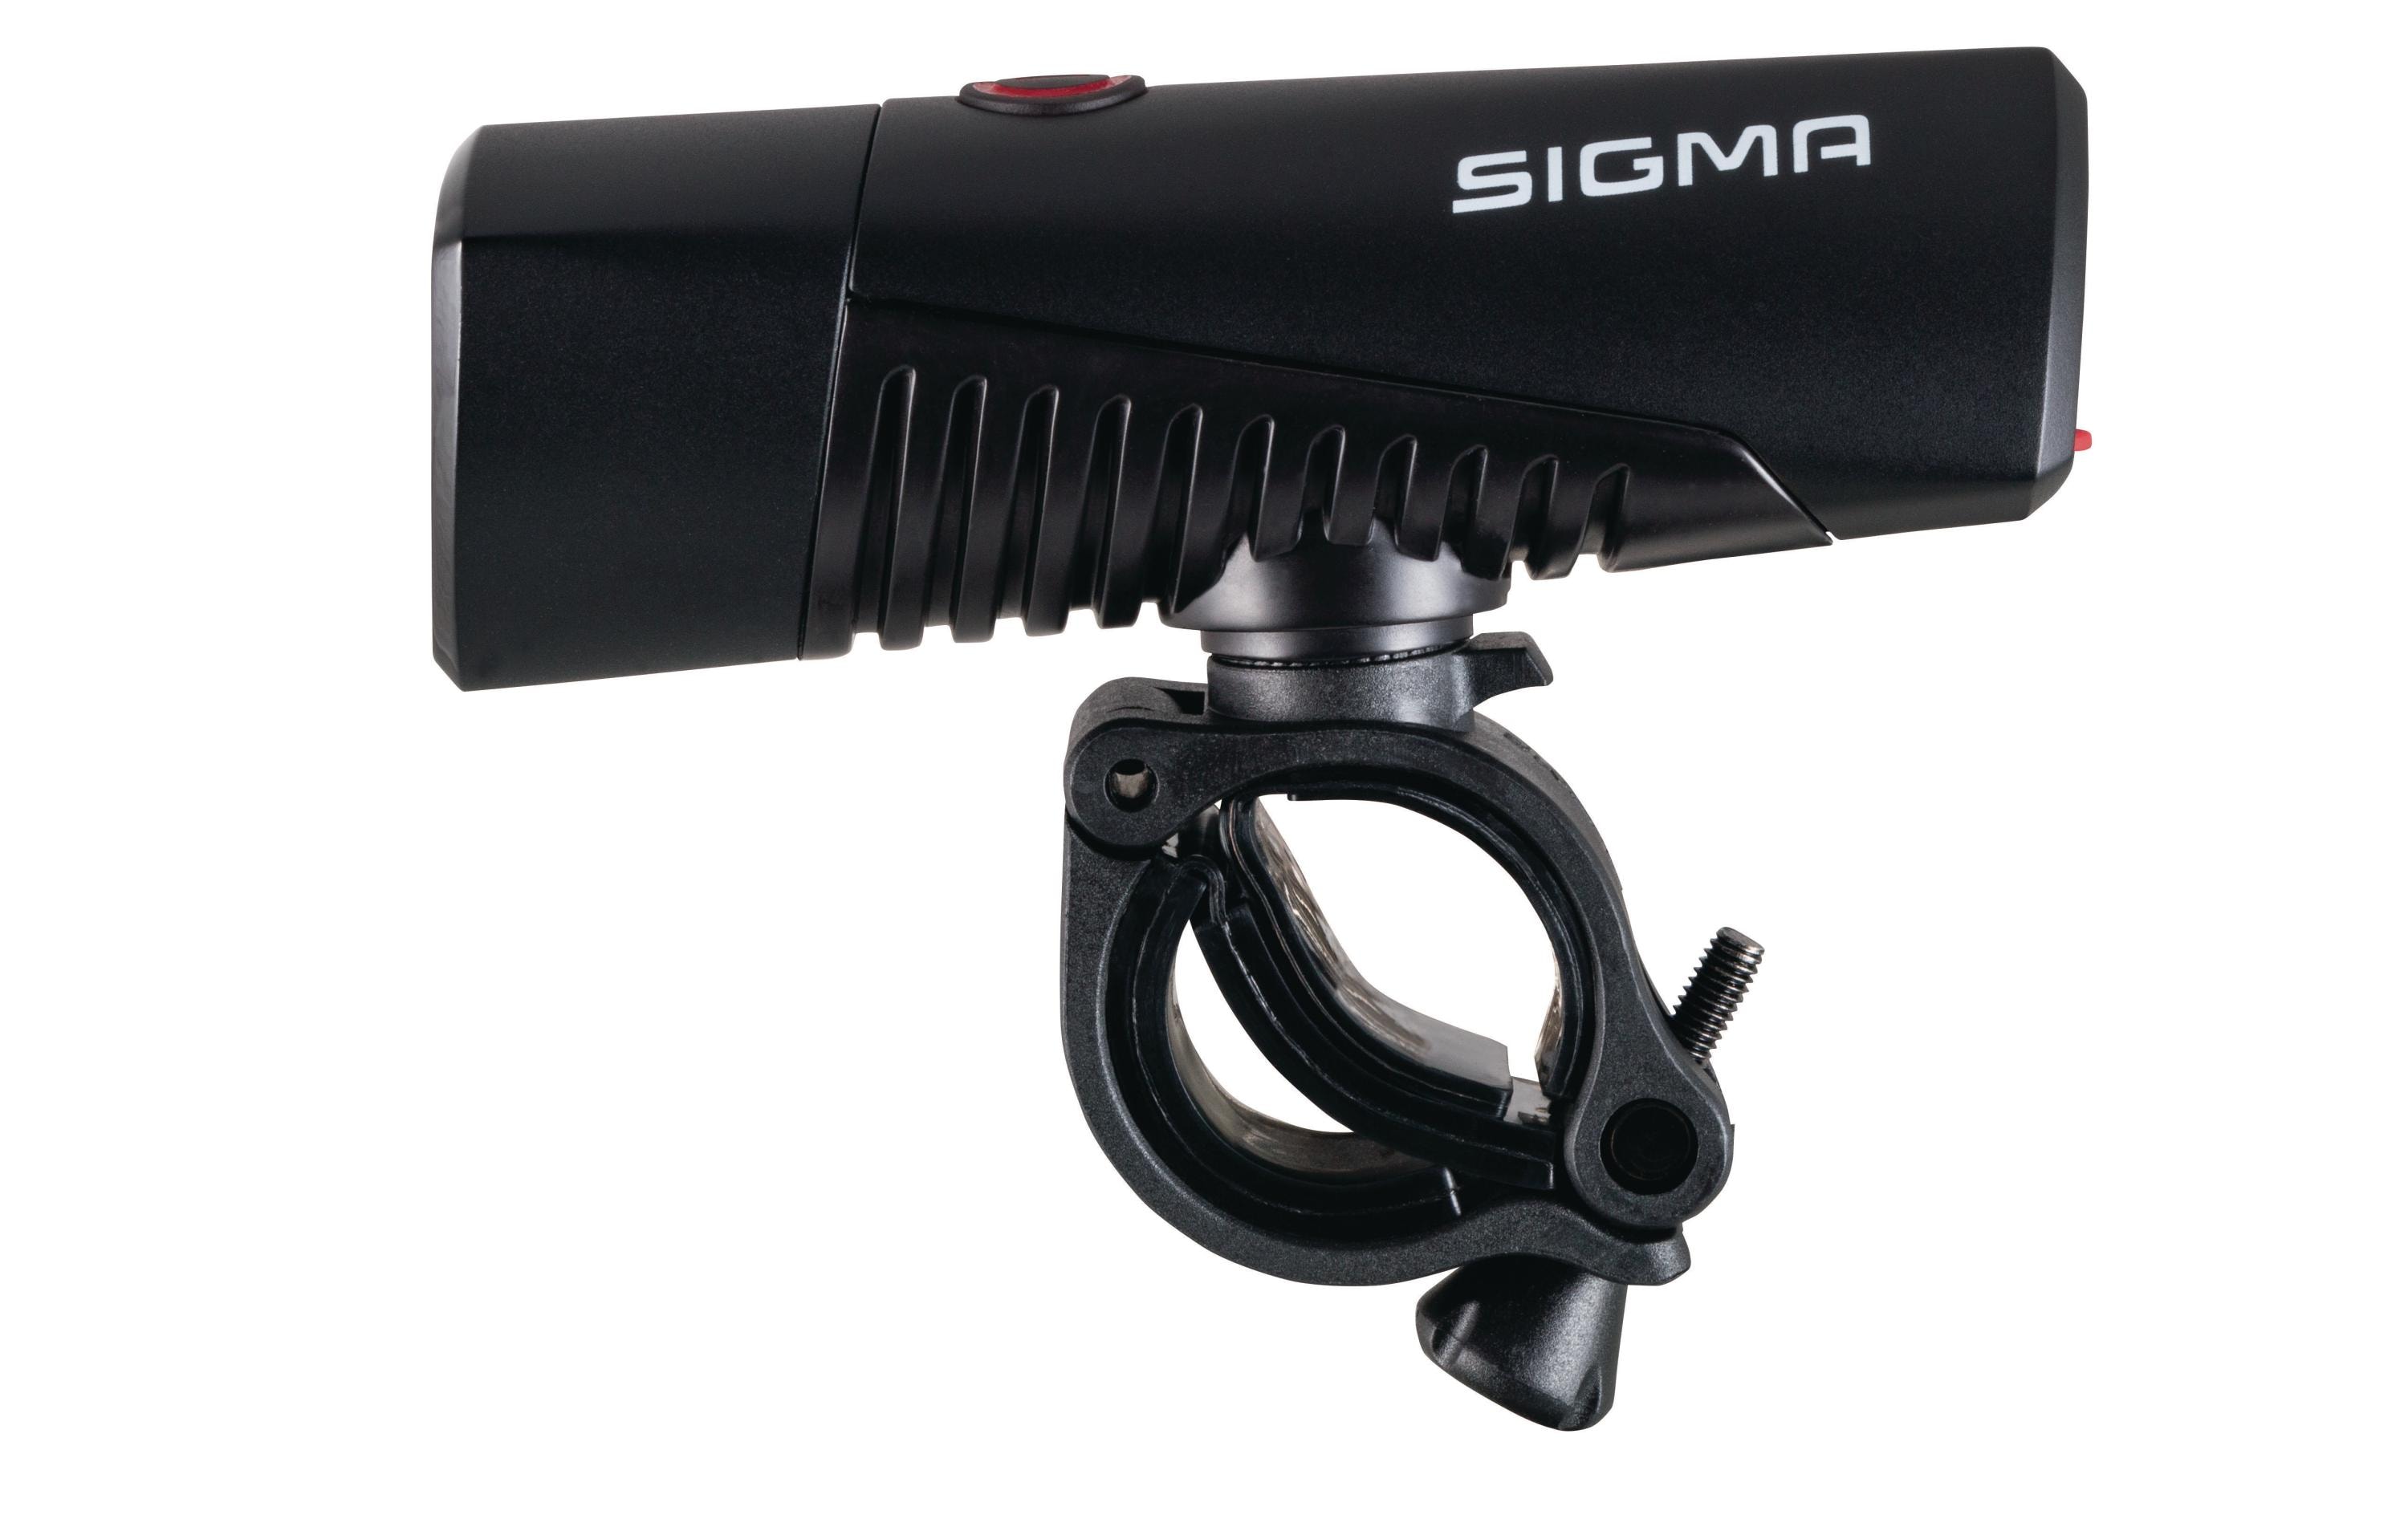 Sigma Velolampe Buster 700